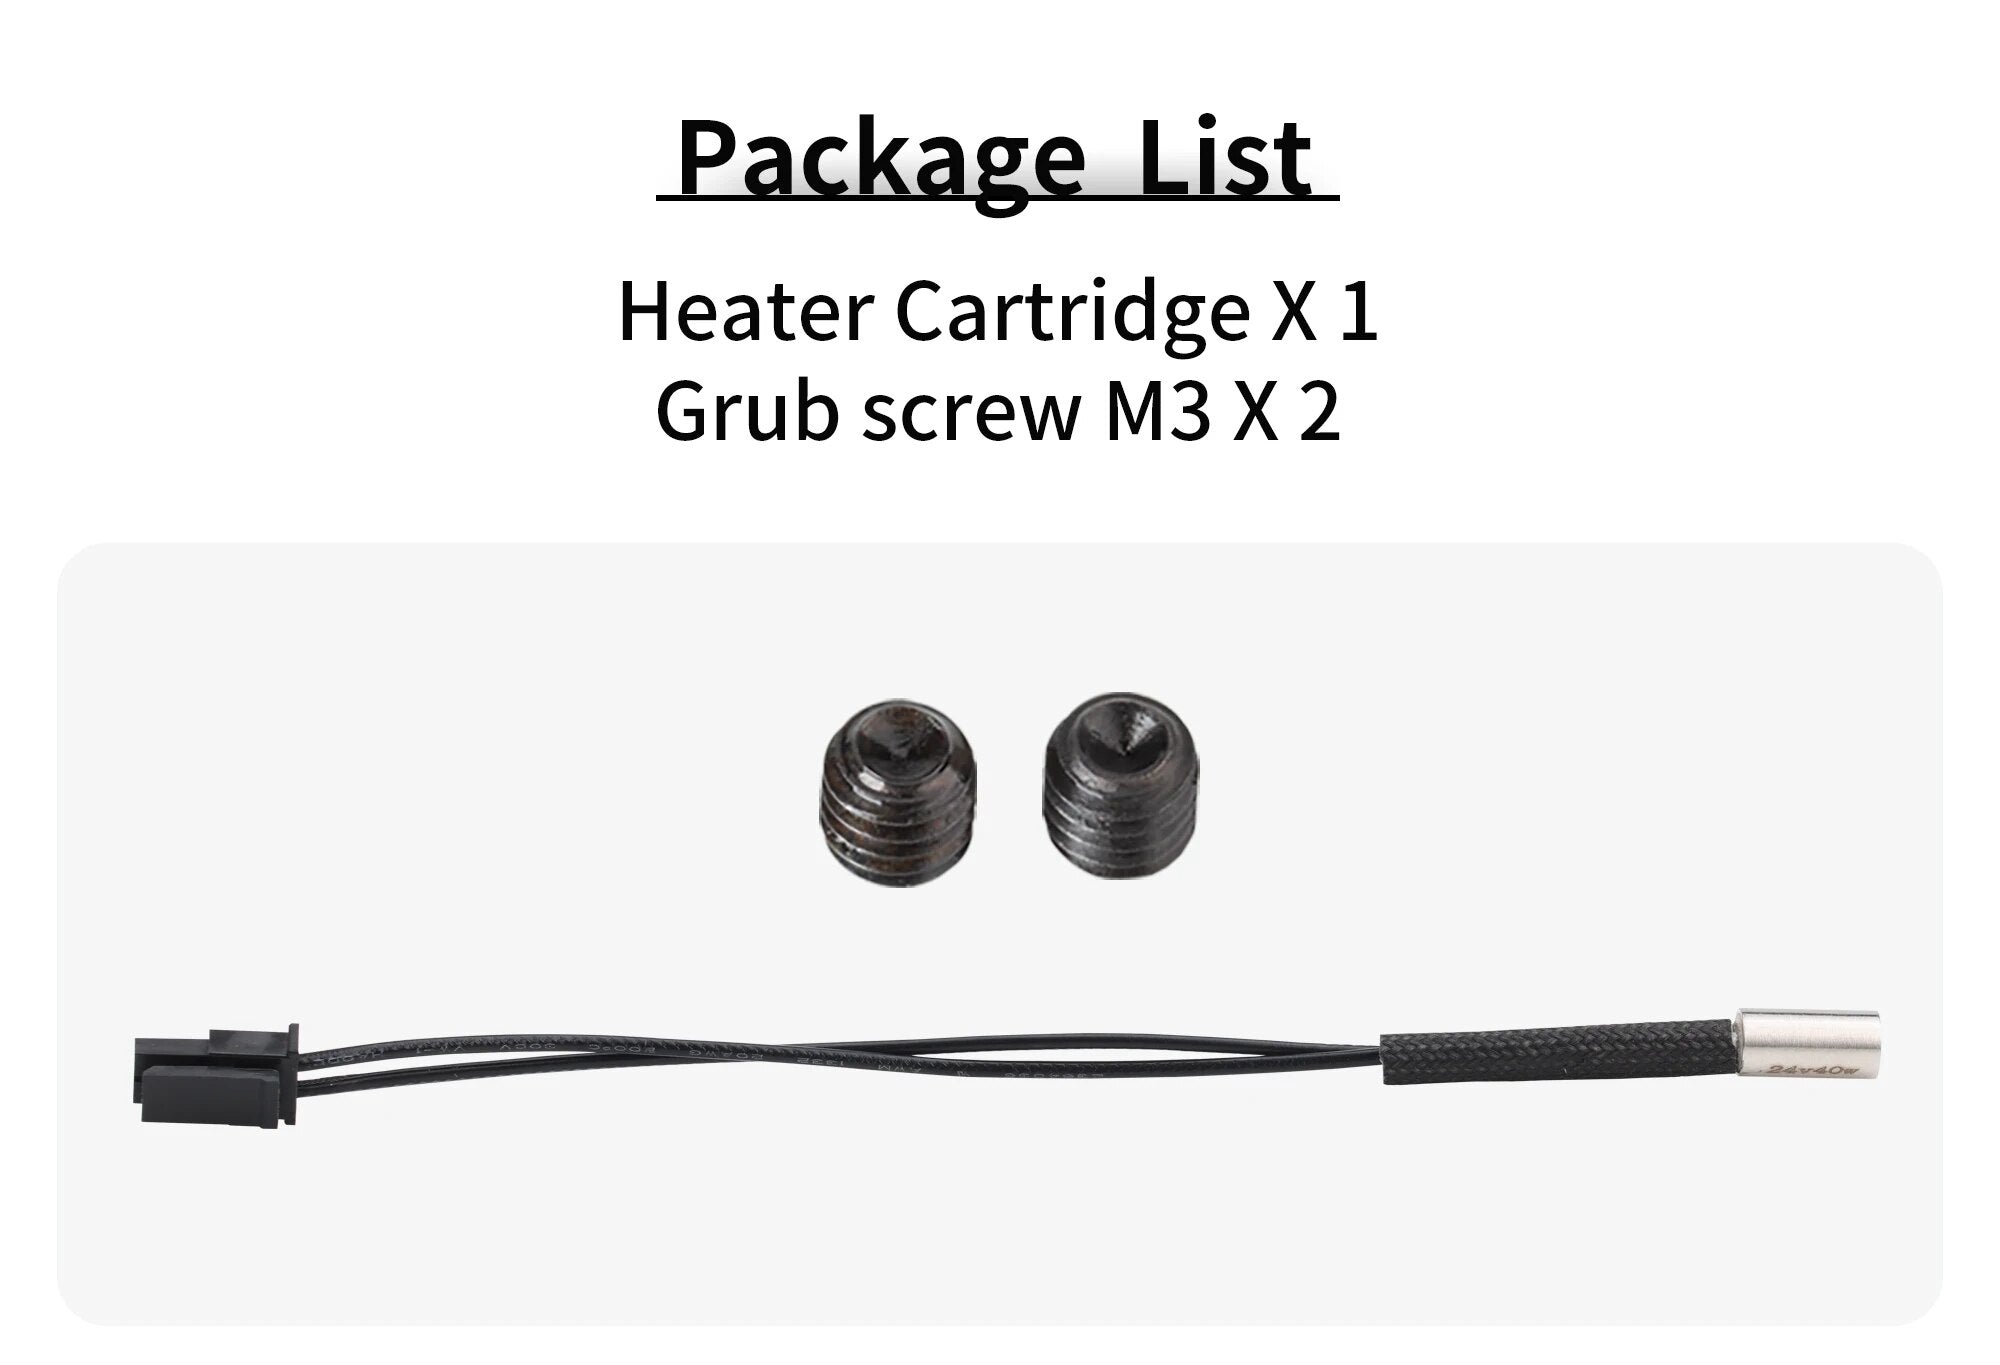 Prusa Comptiable Heater Cartridge (MK4) (Trianglelab)